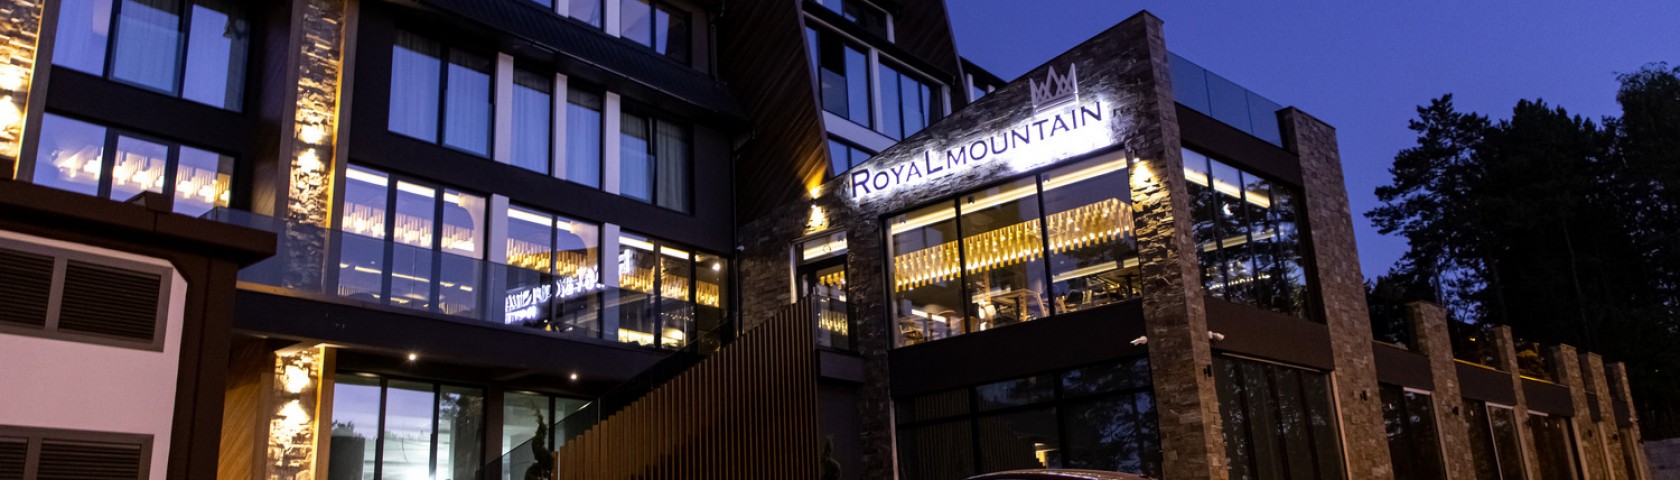 Hotel Royal Mountain